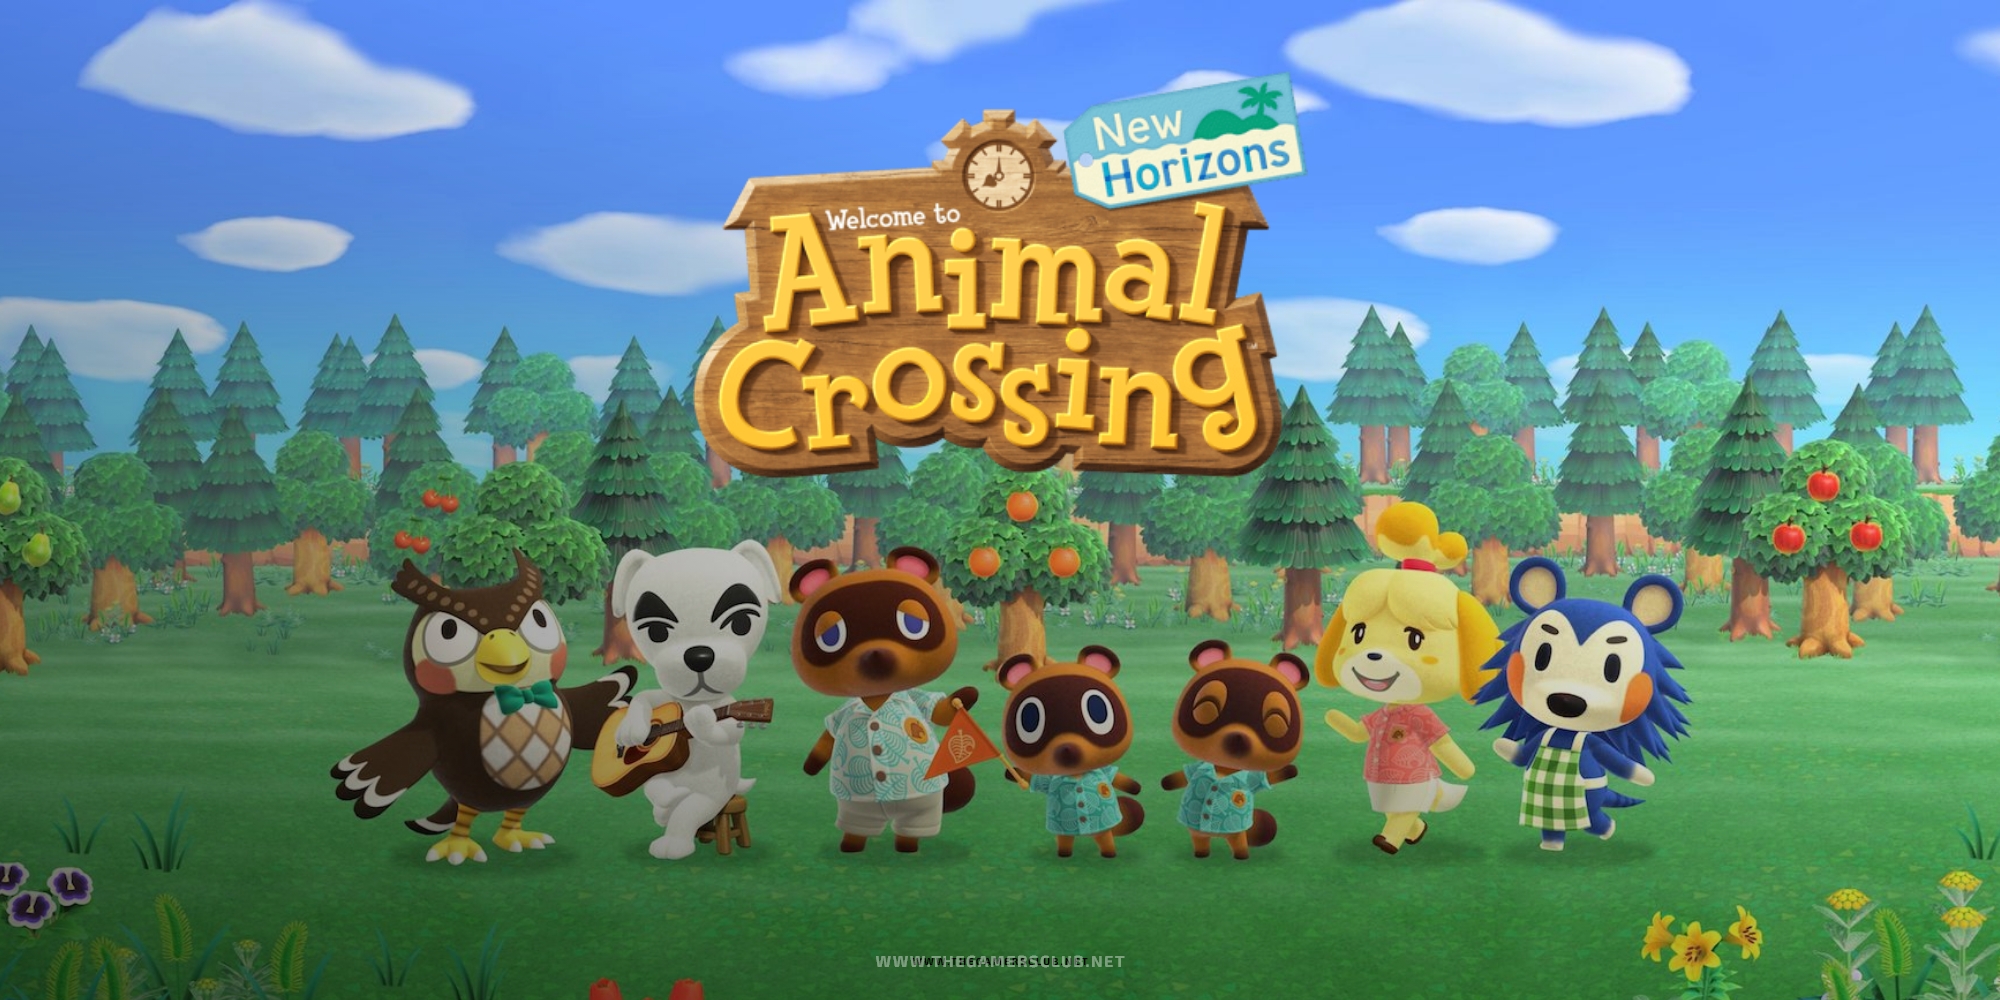 Animal Crossing New Horizons Pro Tips - TheGamersClubNet